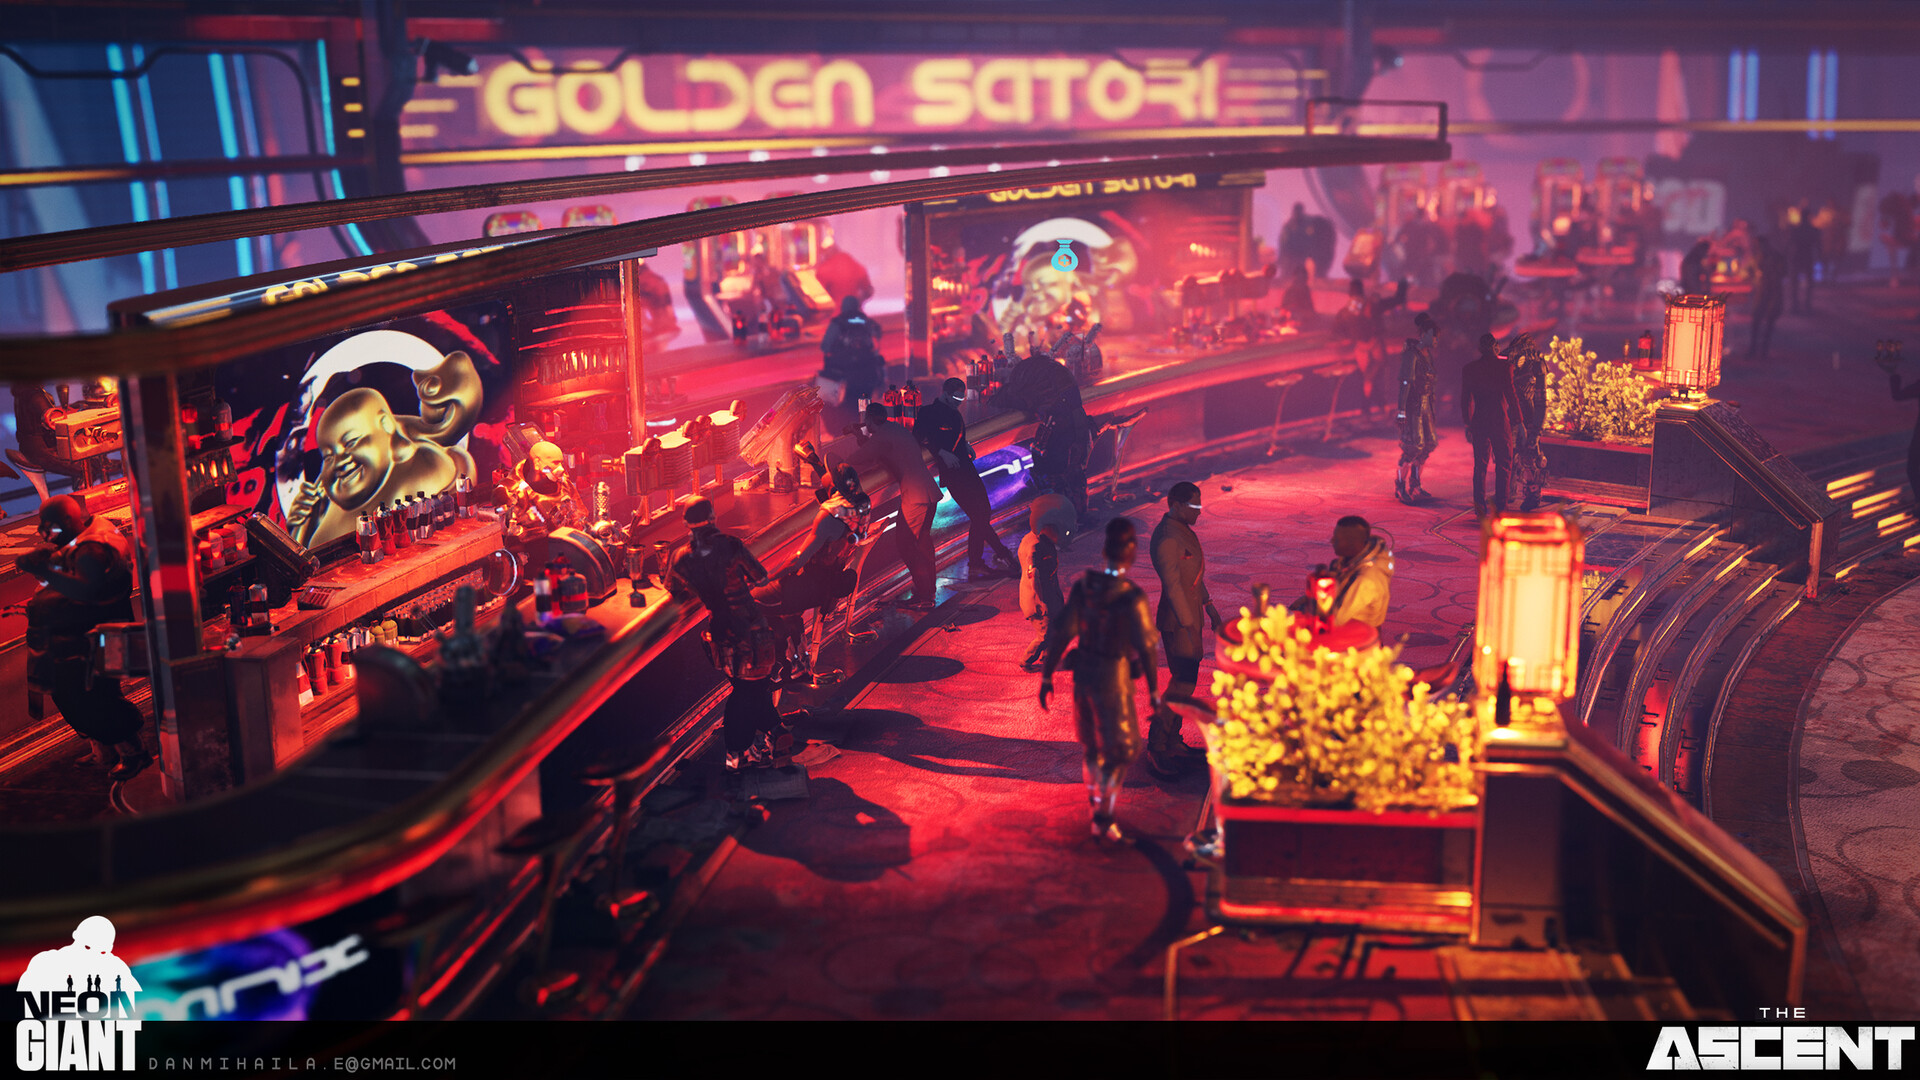 Golden Satori Casino